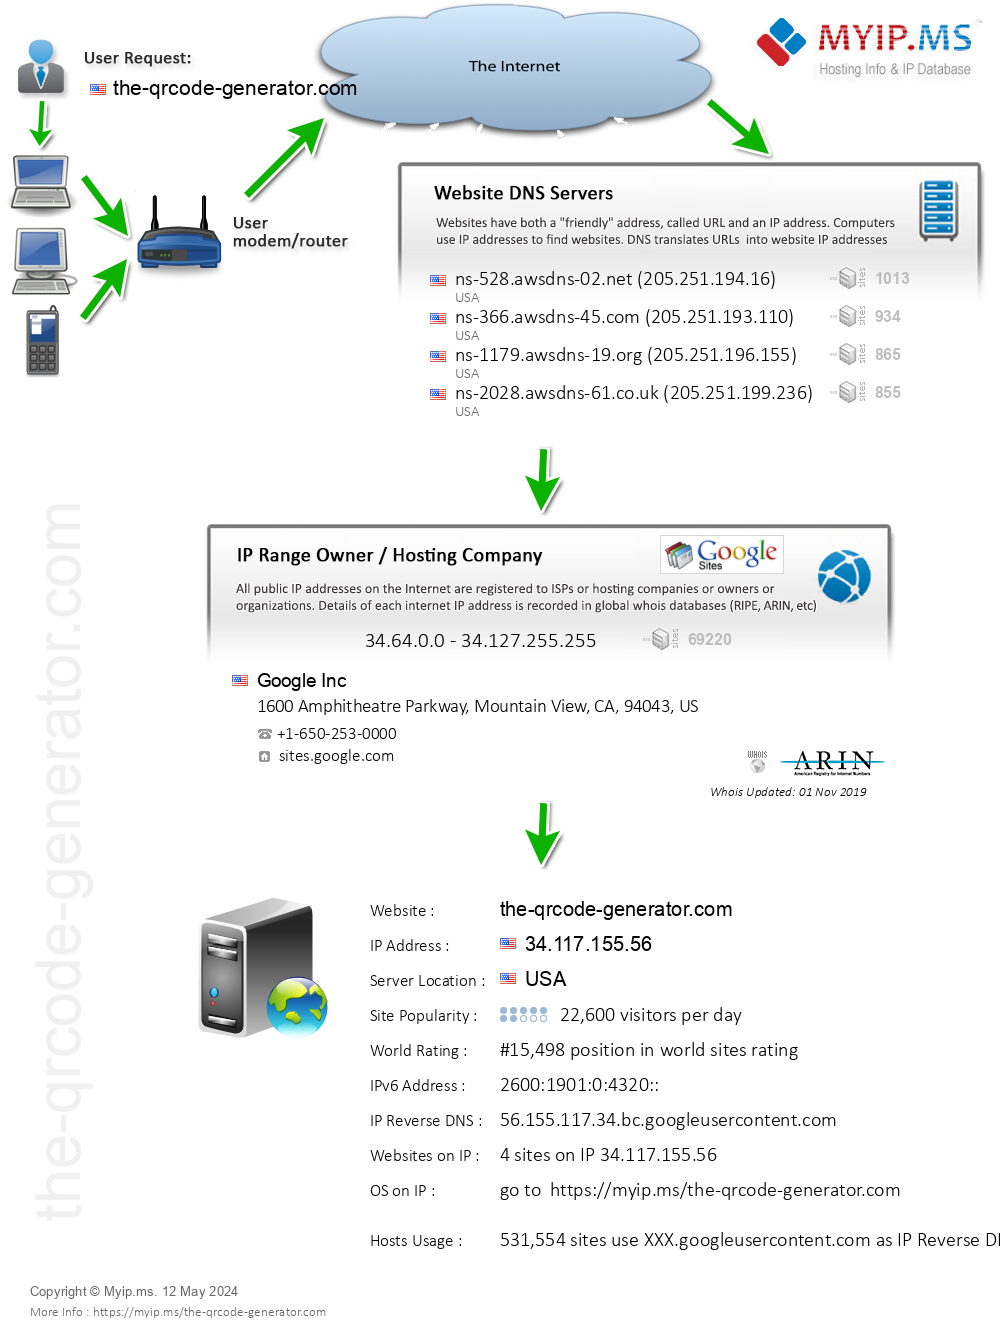 The-qrcode-generator.com - Website Hosting Visual IP Diagram